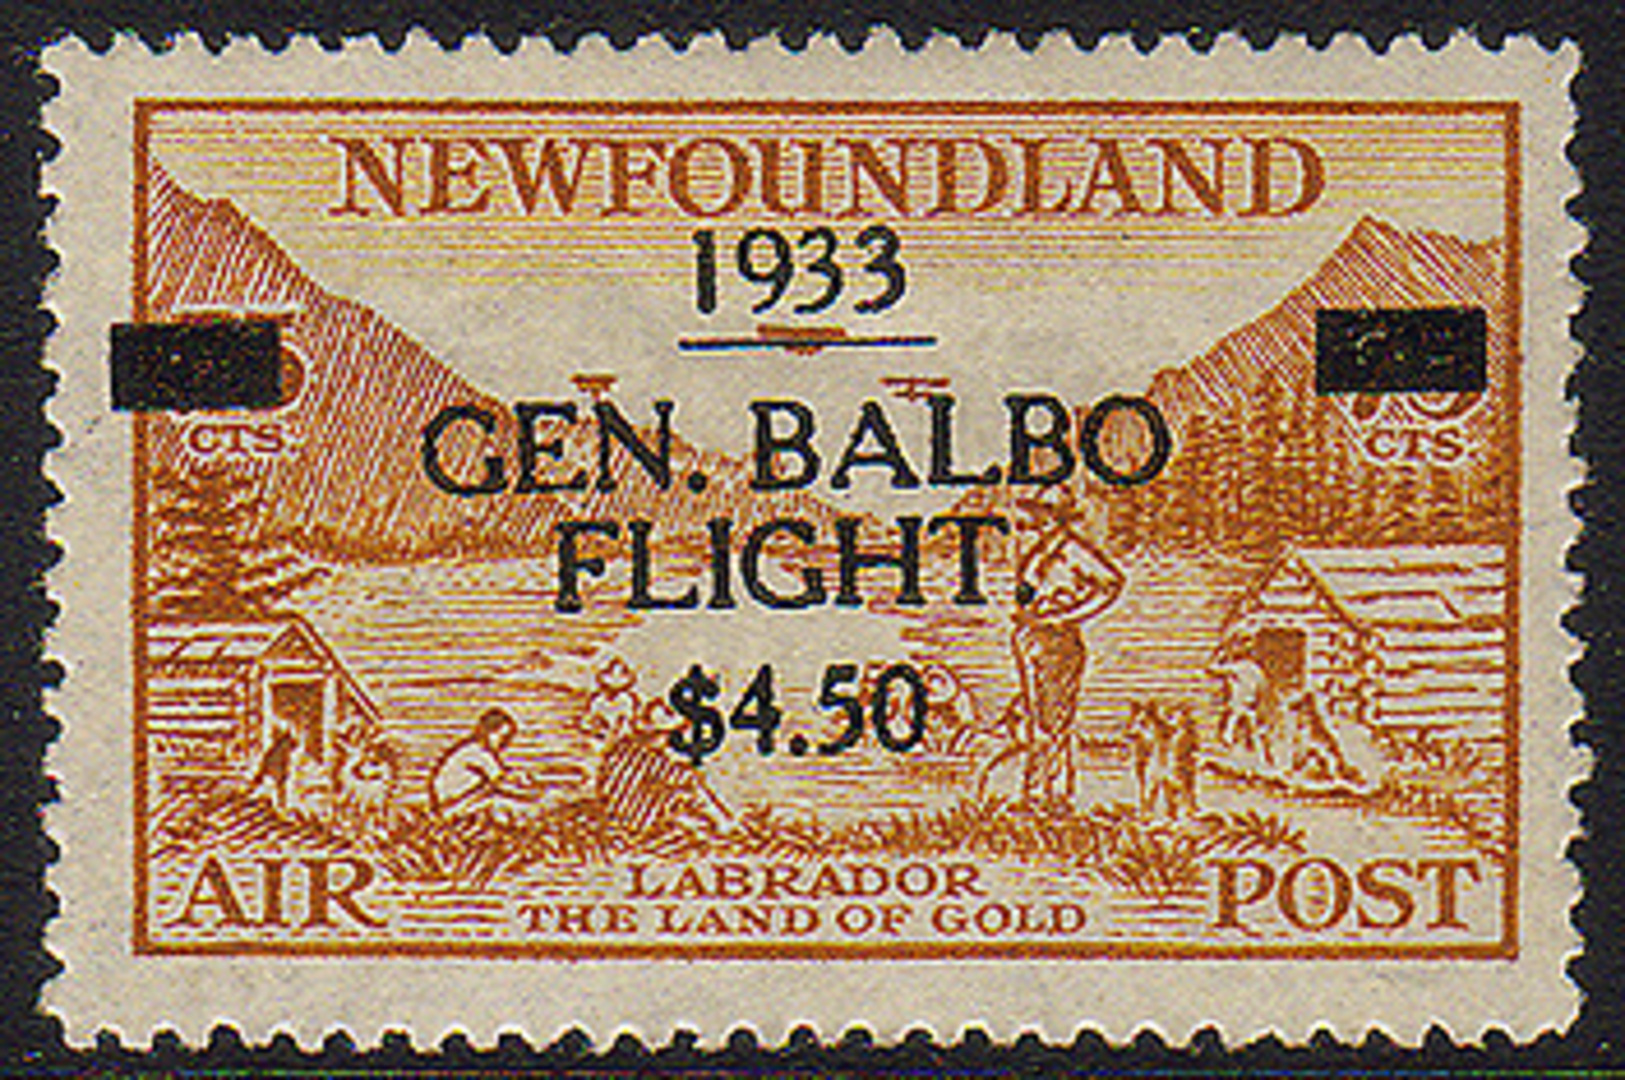 Newfoundland $4.50 Gen. Balbo Flight